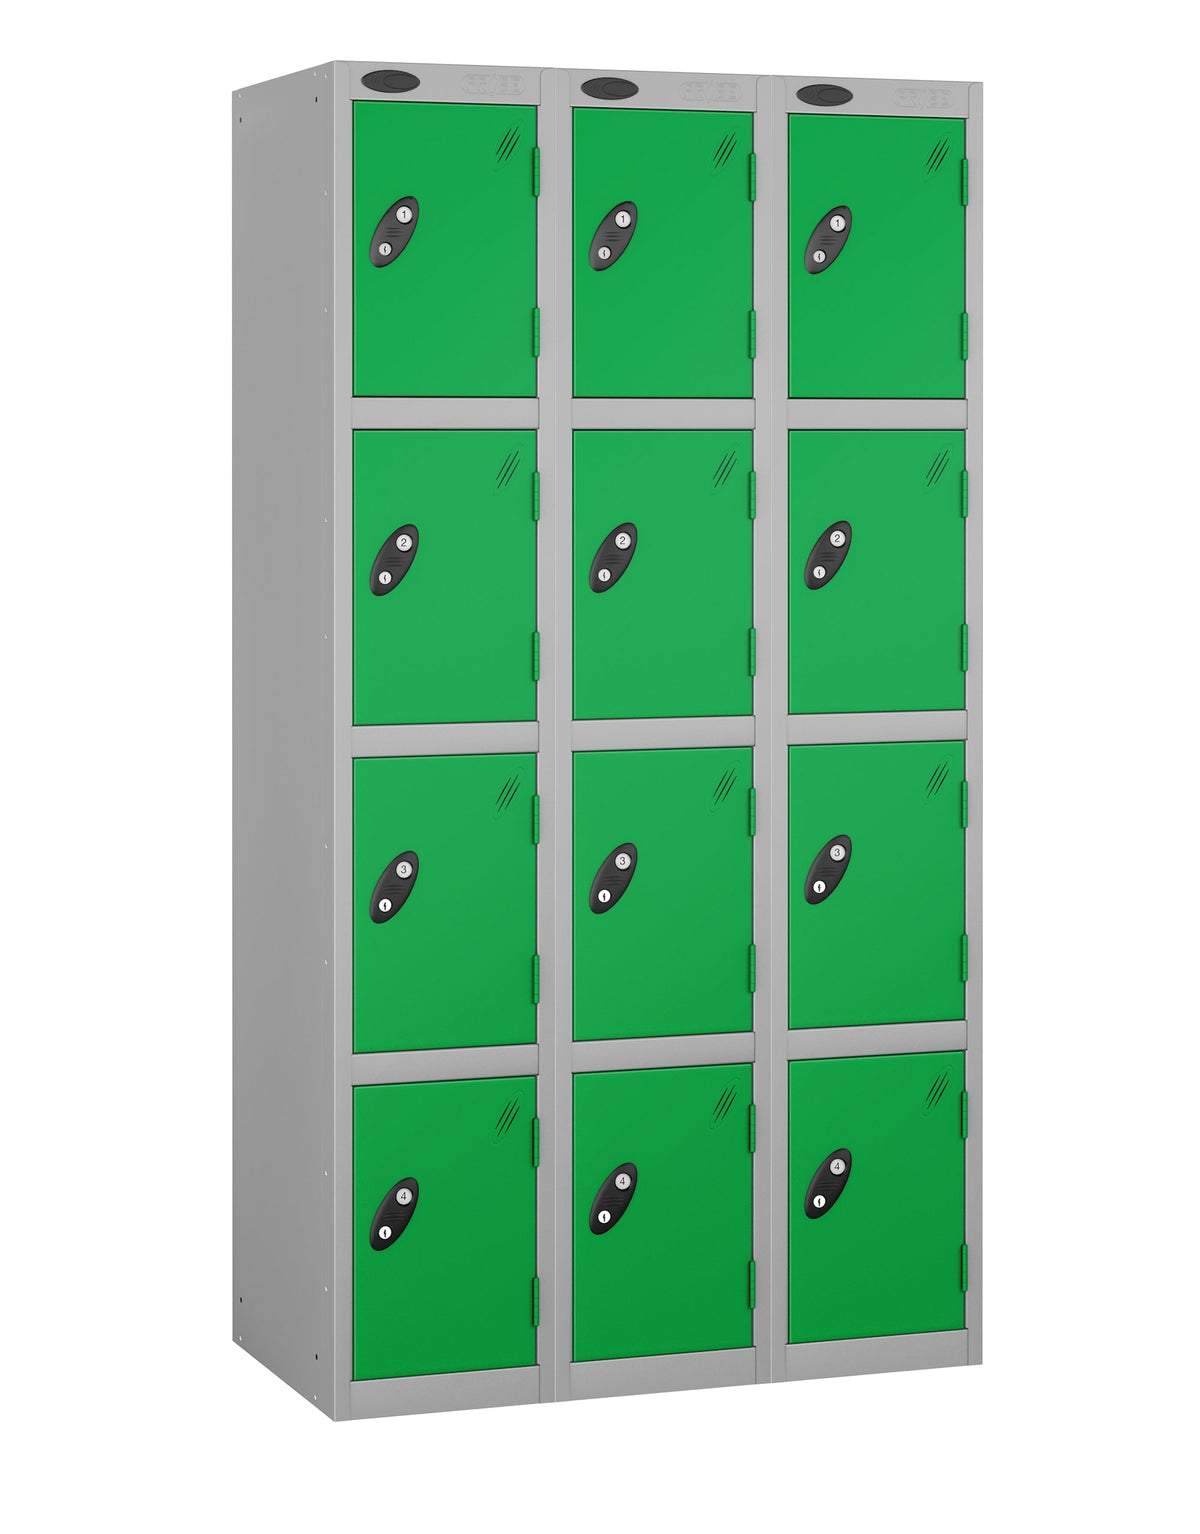 PROBEBOX STANDARD 3 NEST STEEL LOCKERS - FOREST GREEN 4 DOOR Storage Lockers > Lockers > Cabinets > Storage > Probe > One Stop For Safety   